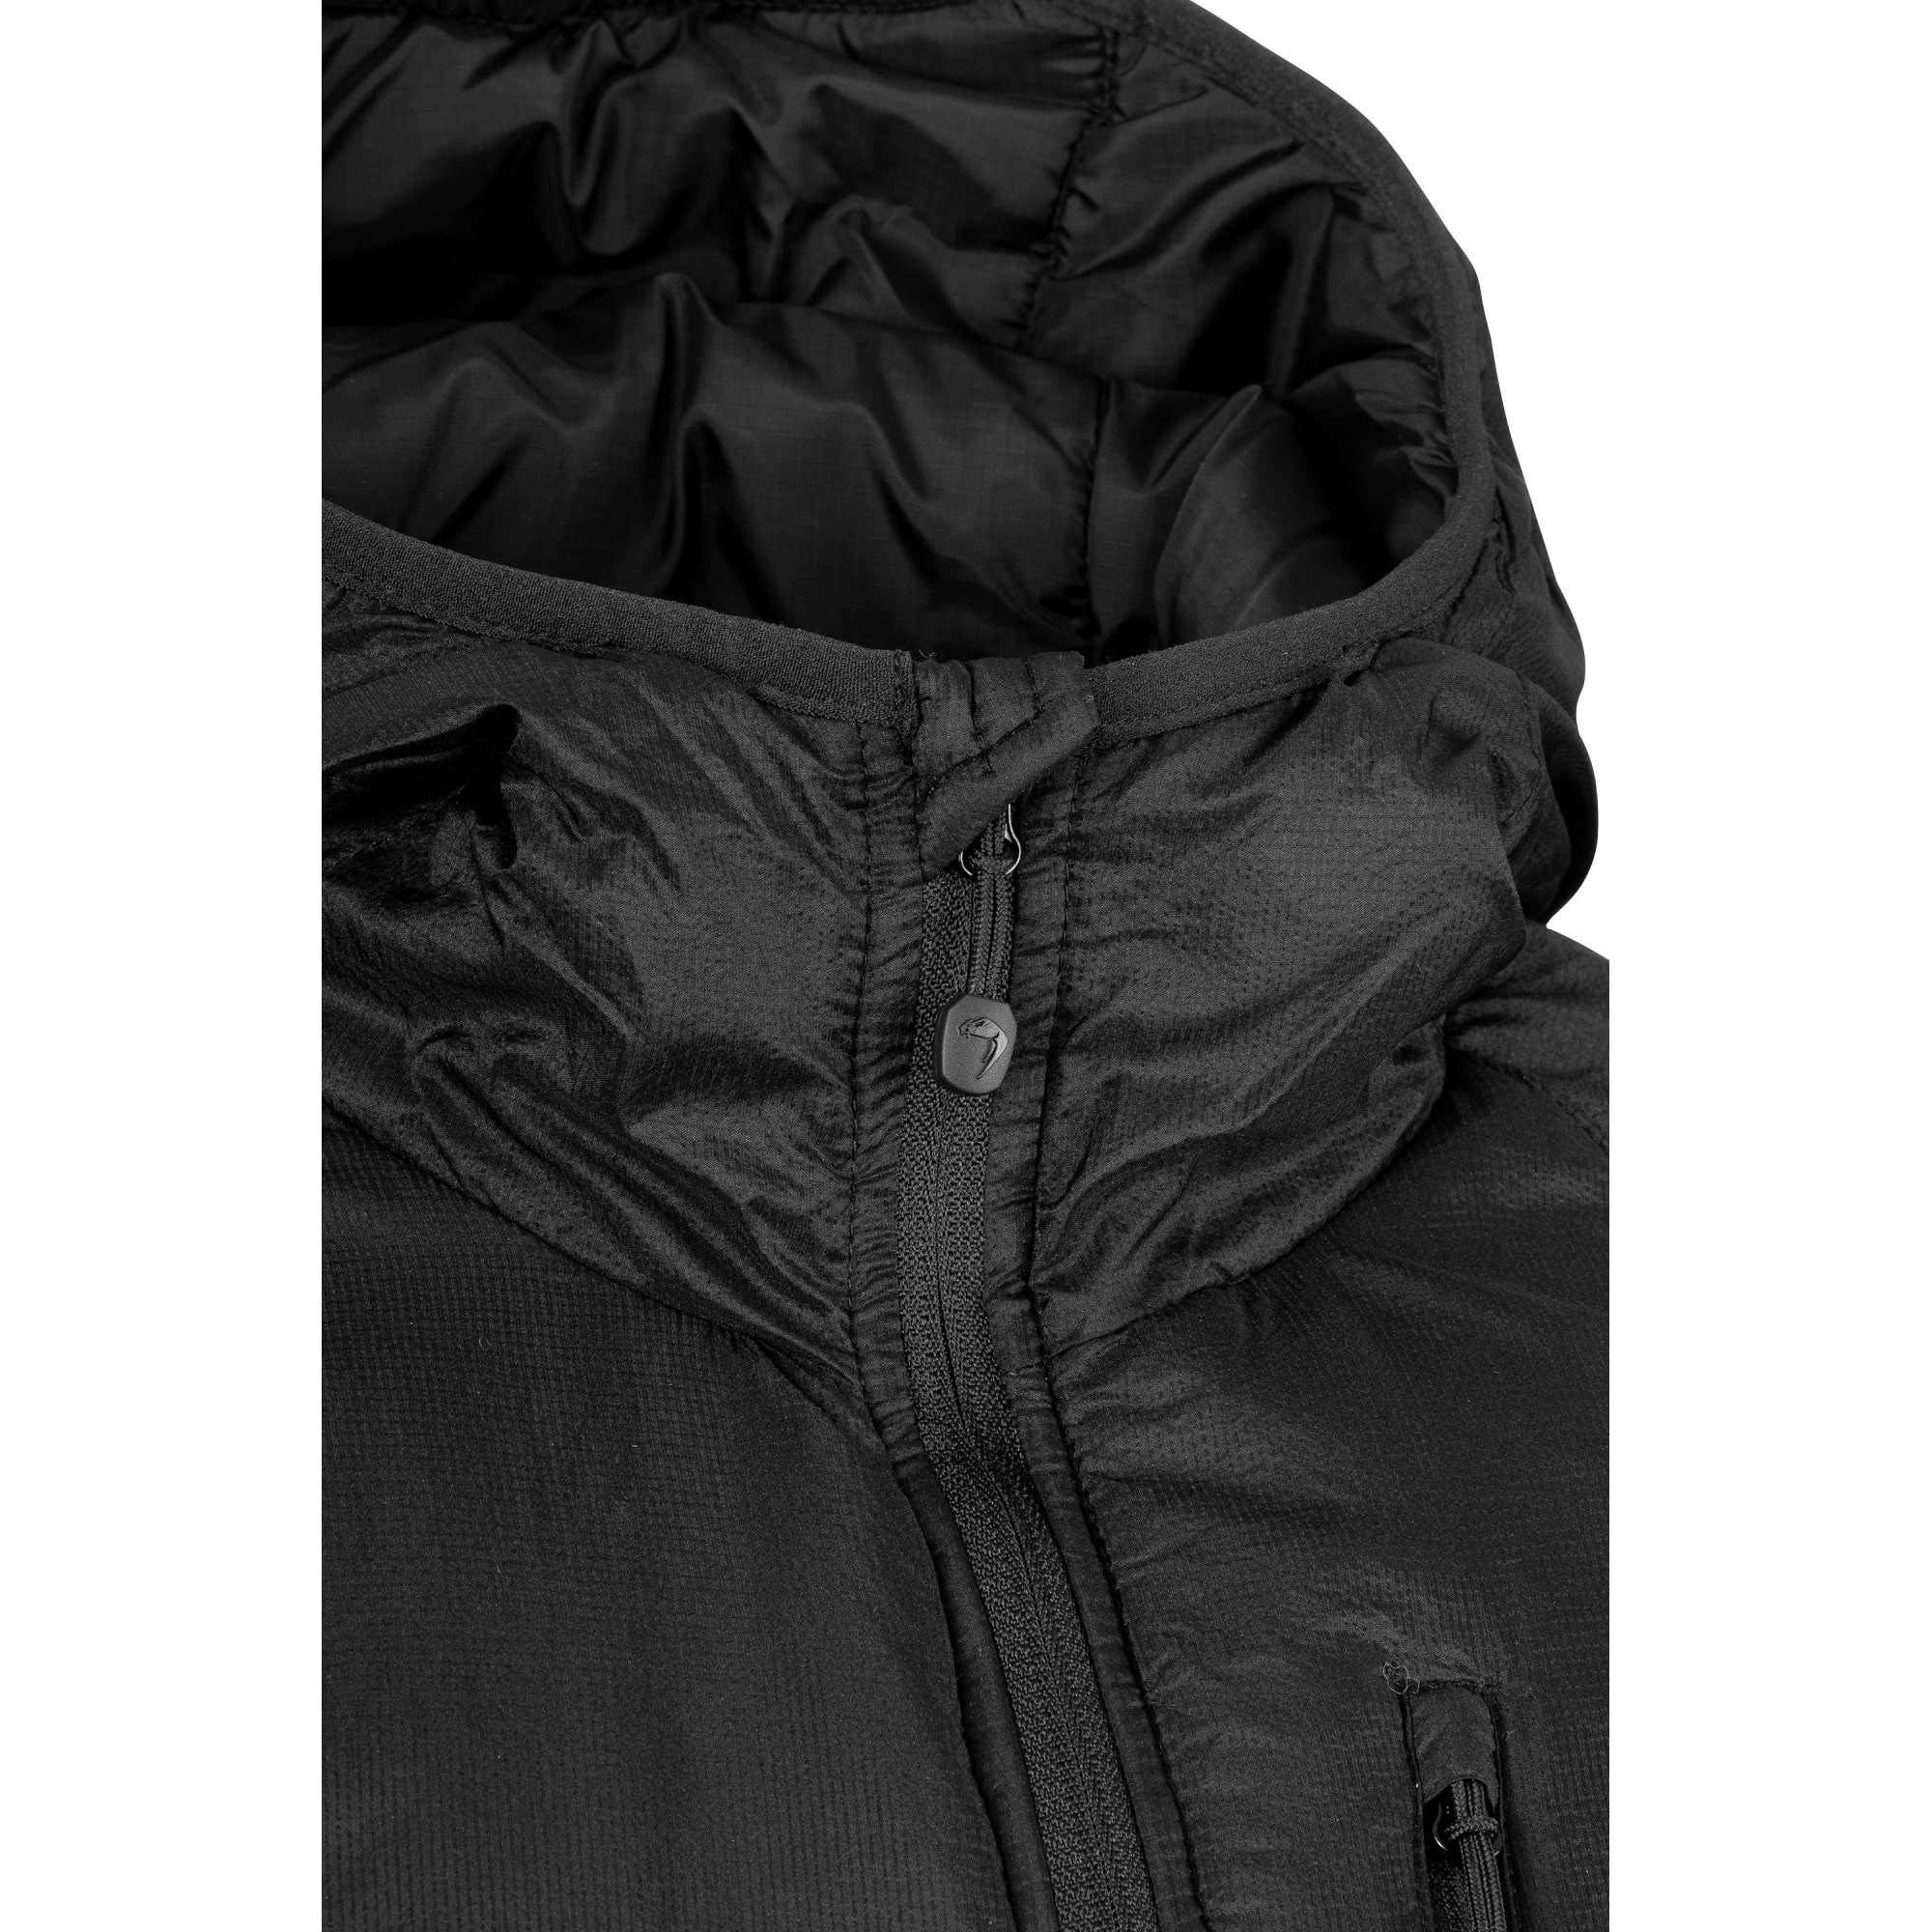 FRONTIER Jacket BLACK Viper® VJKTFROBLK L-11